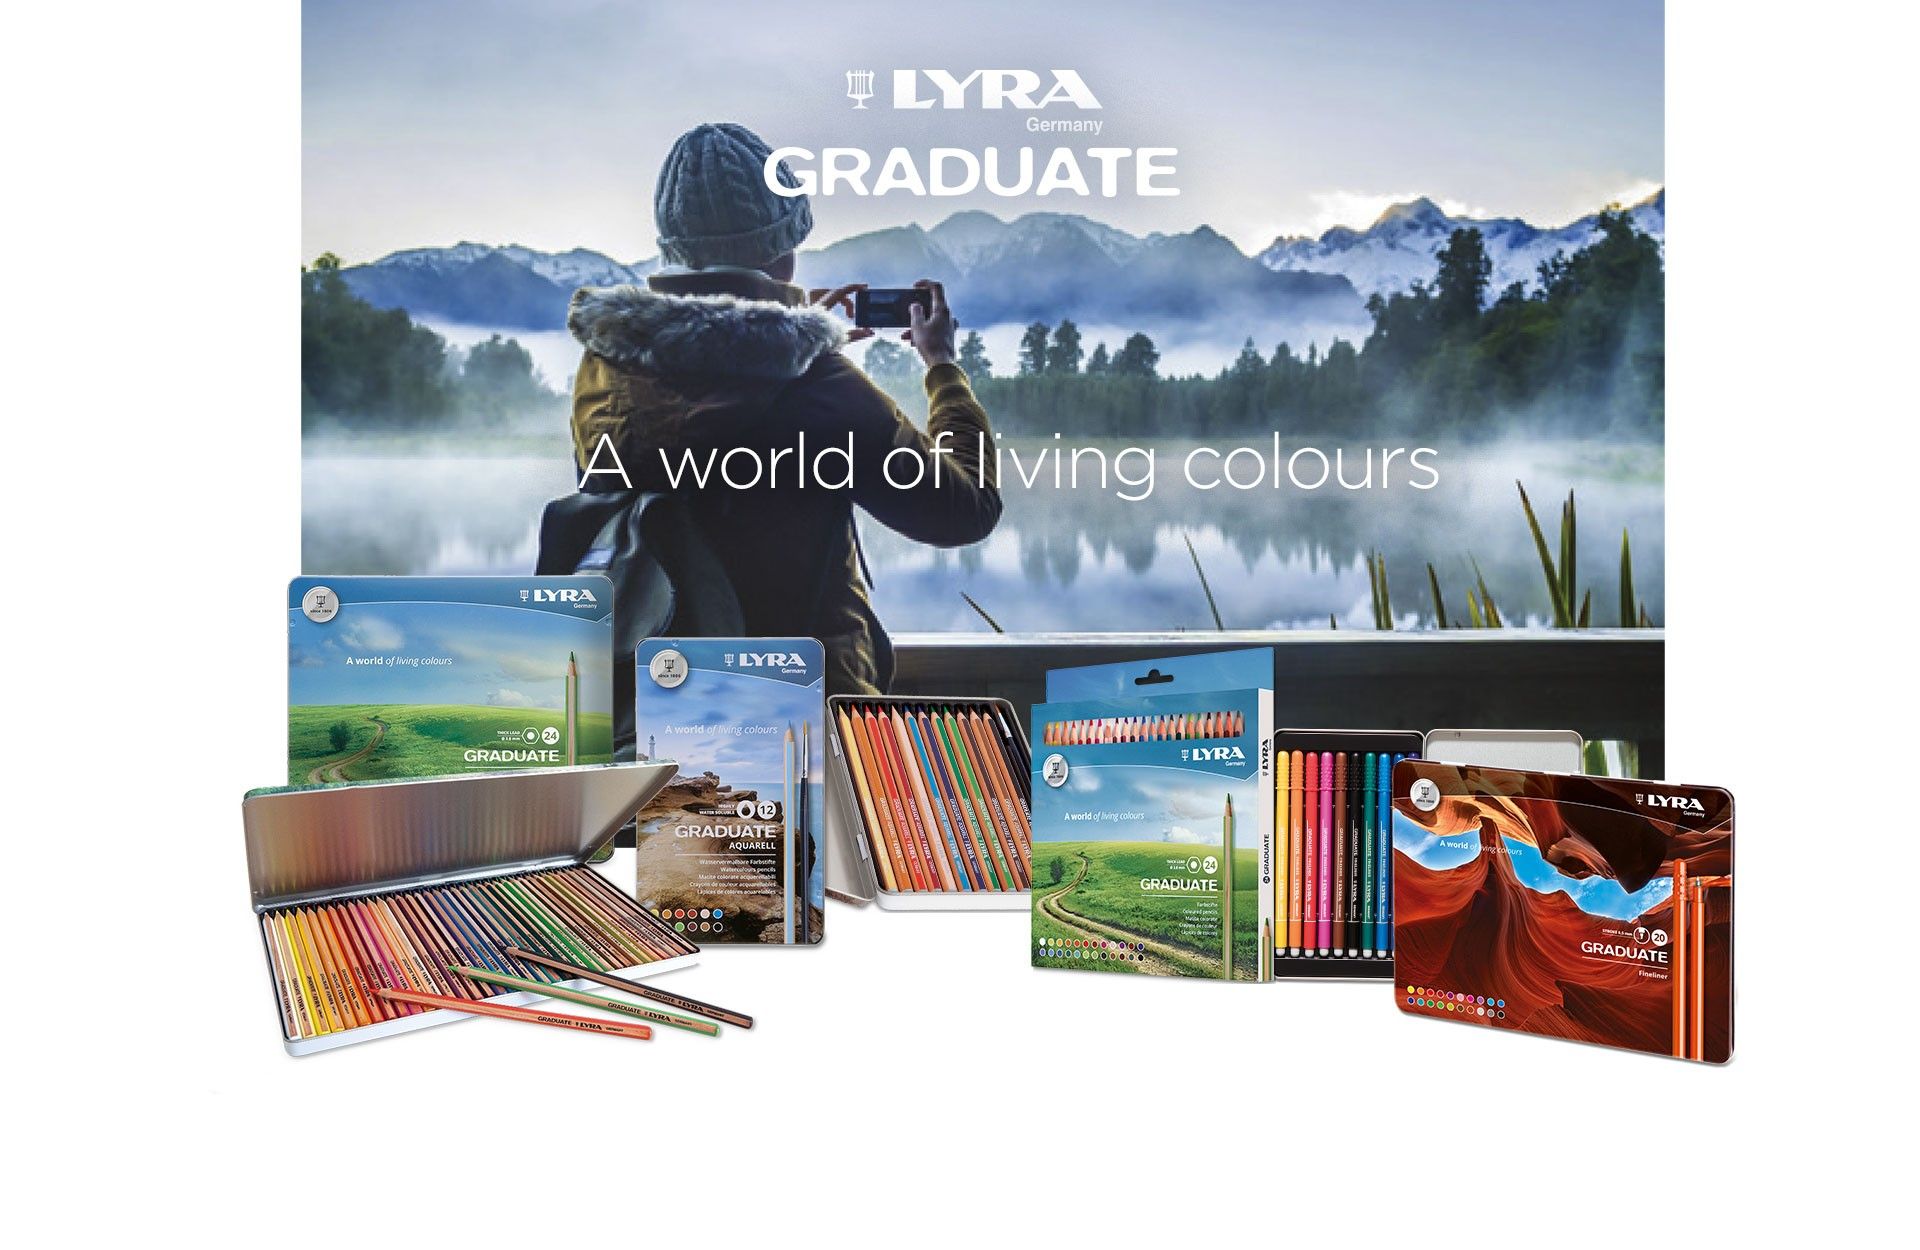 Lyra Graduate - A world of living colours